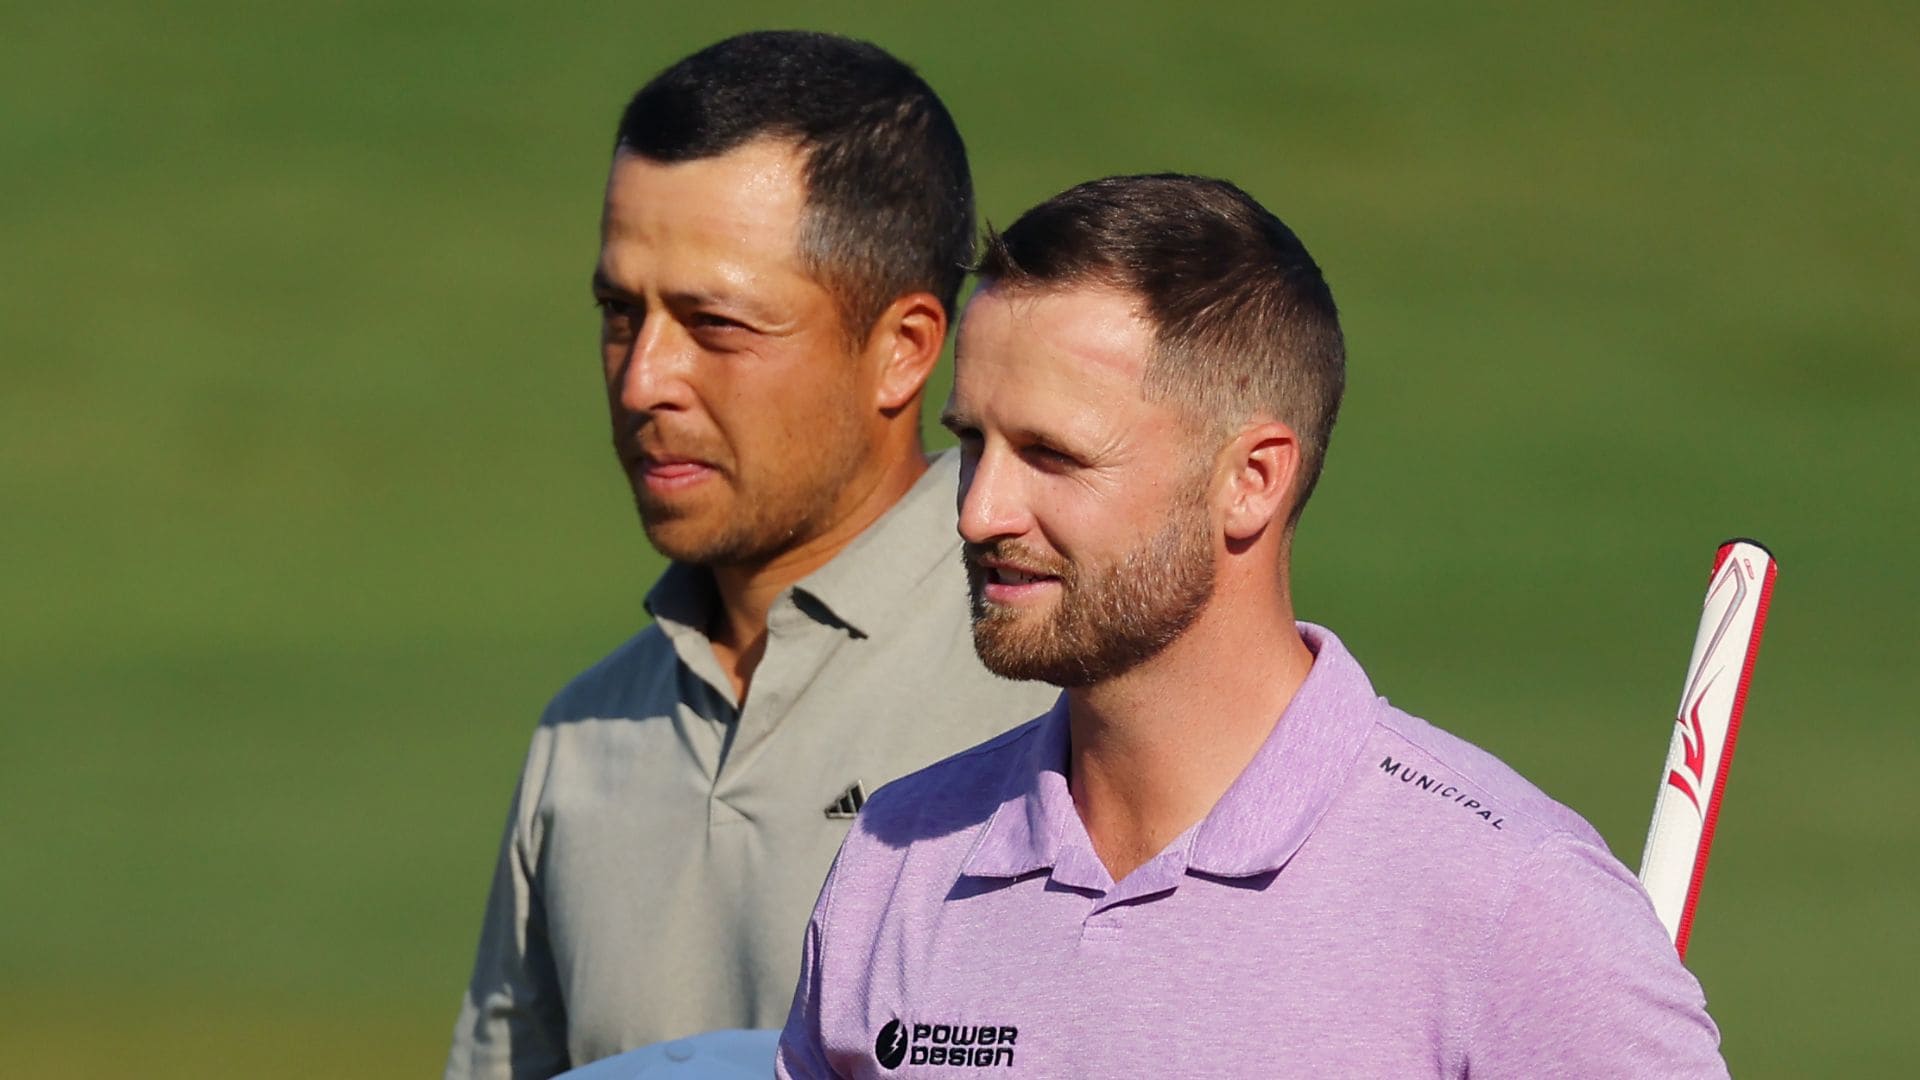 Wyndham Clark looks to fend off Xander Schauffele at Wells Fargo Championship for first PGA Tour win